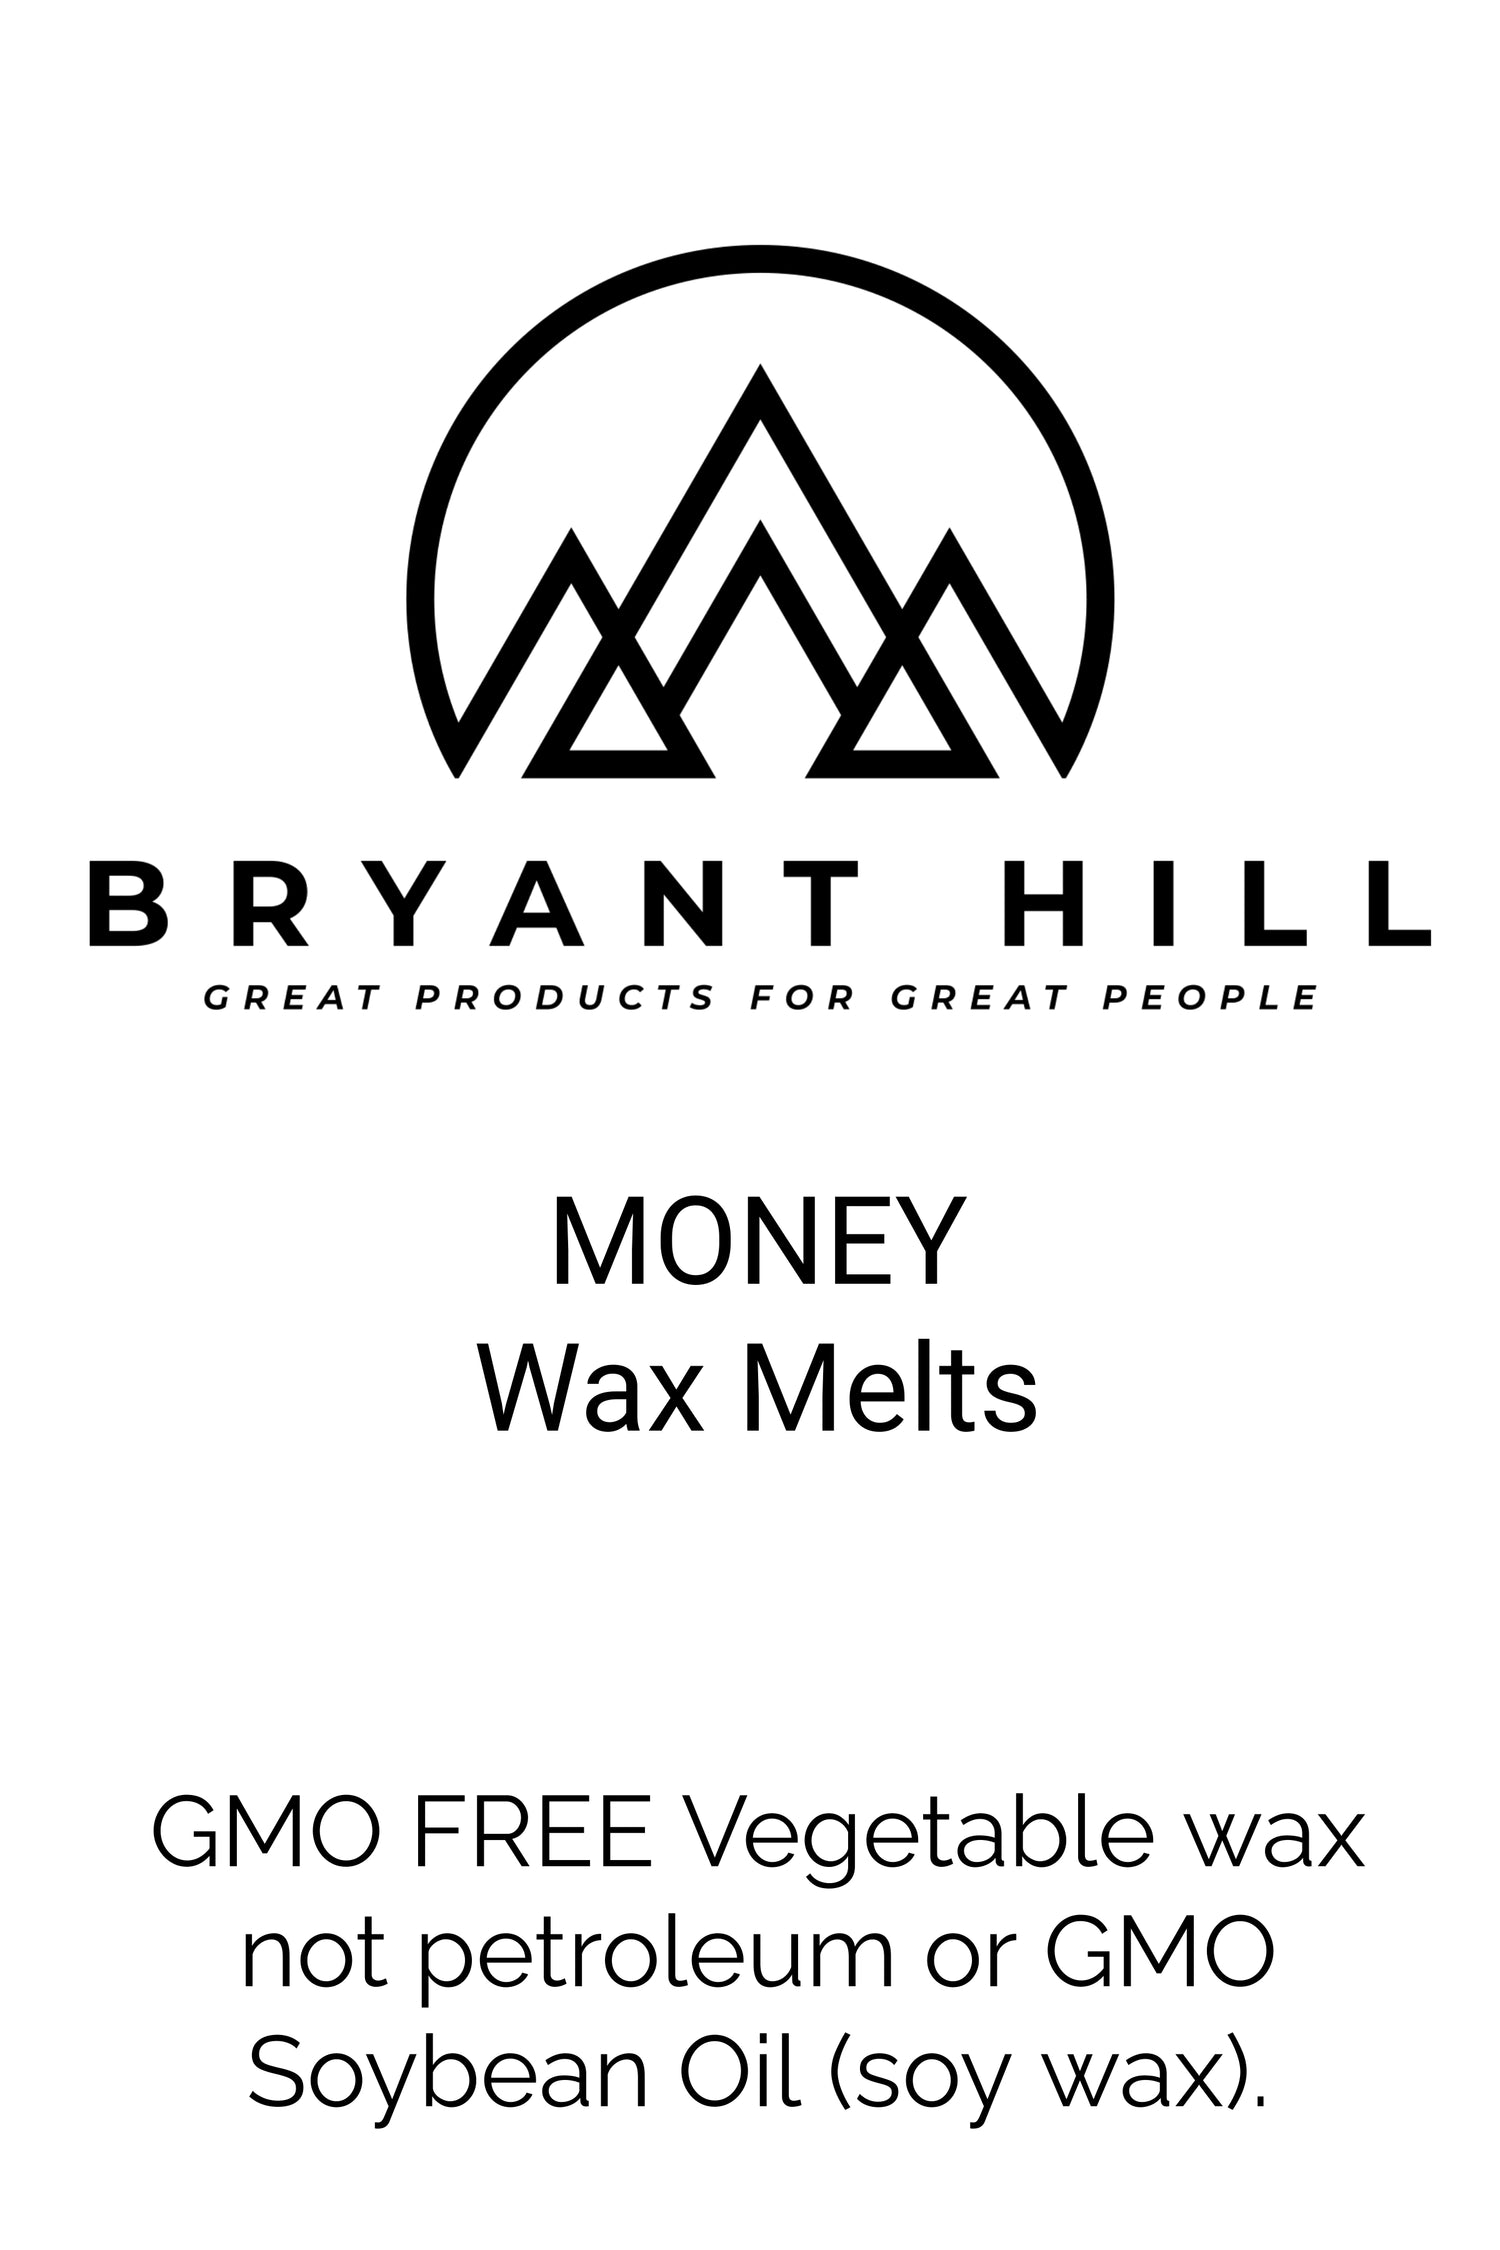 BRYANT-HILL-WAX-MELTS-MONEY